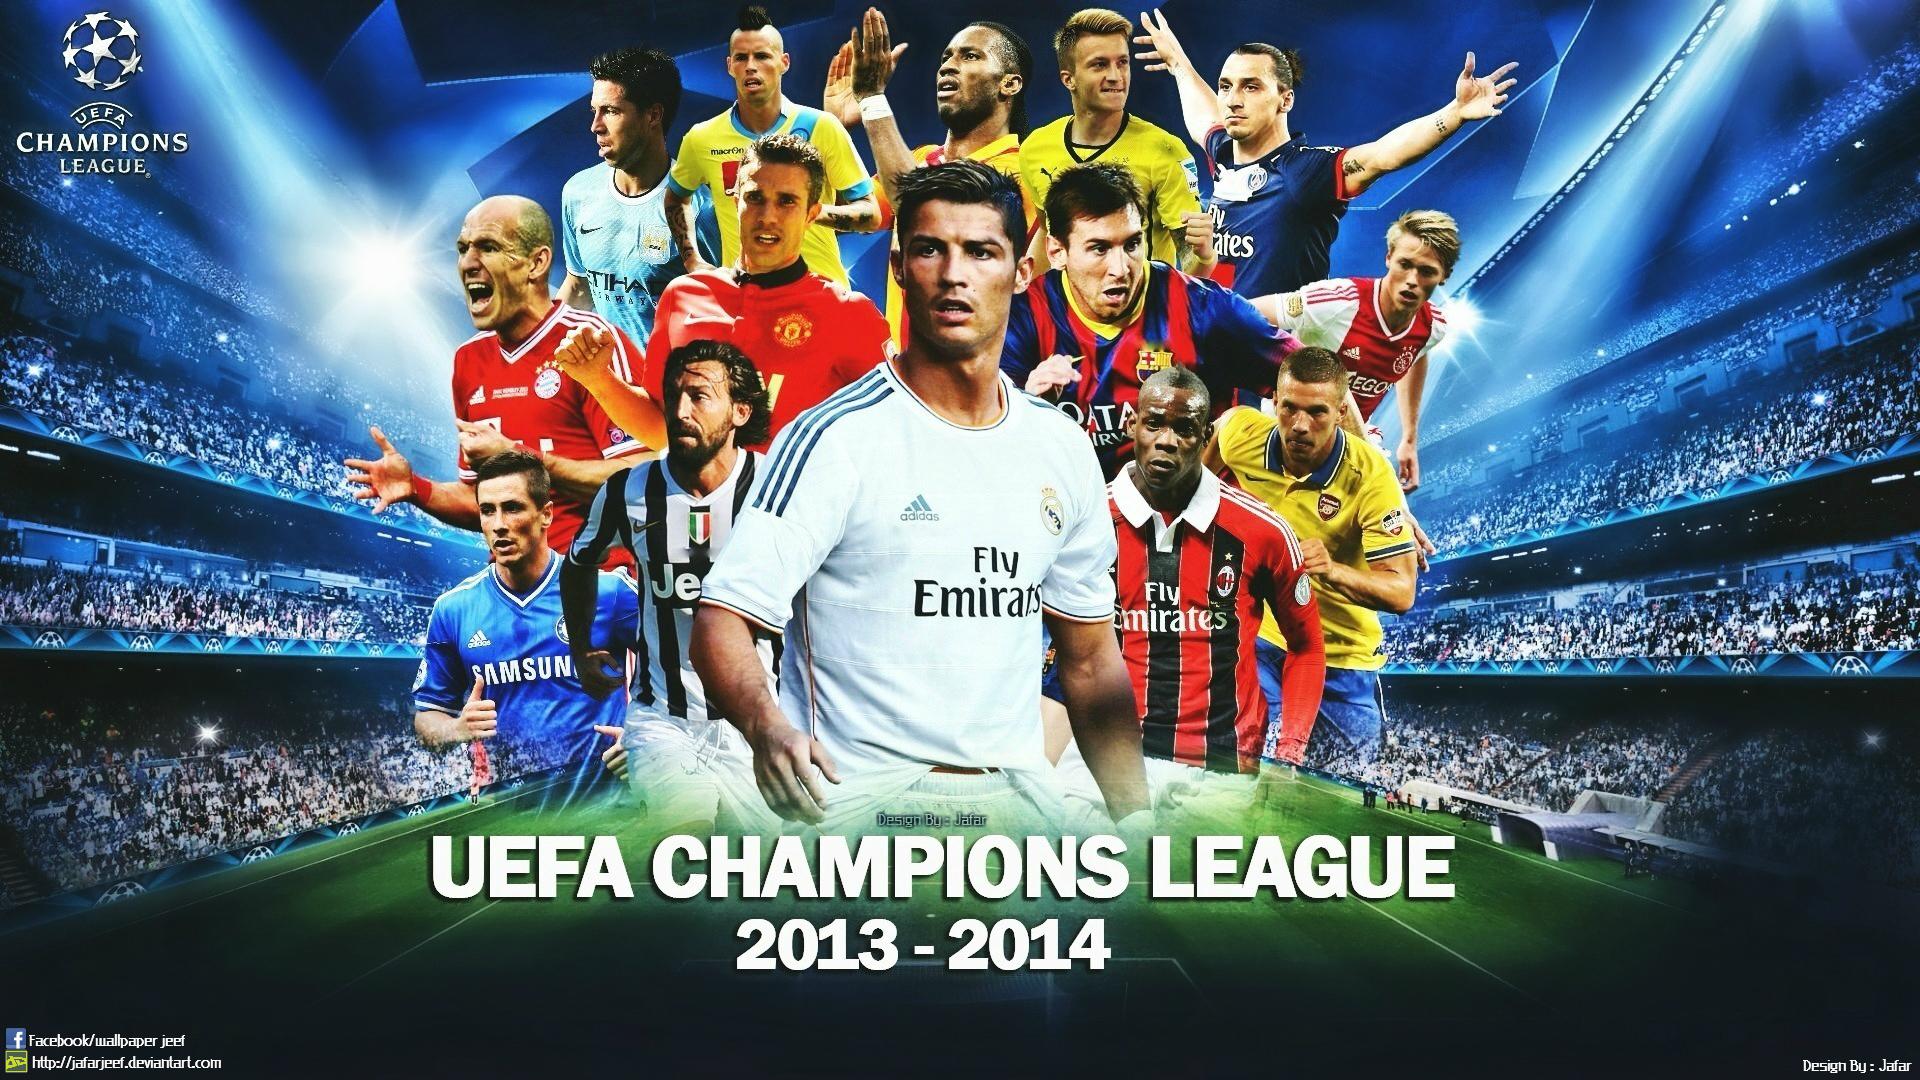 Uefa champions league 2013 2014 HQ WALLPAPER   138567